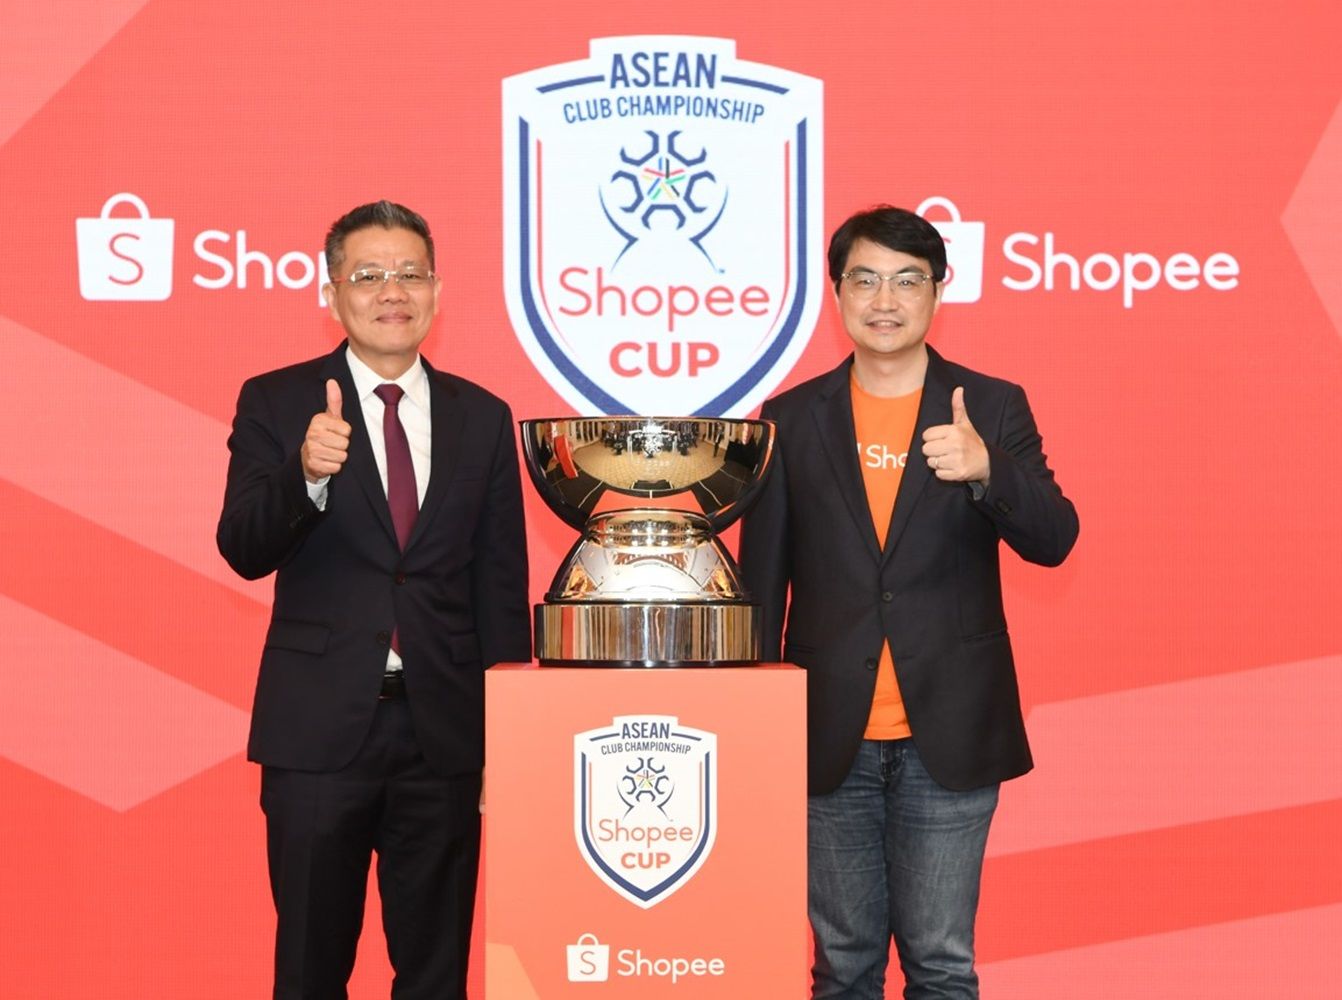 Shopee dan ASEAN Football Federation atau Federasi Sepak Bola ASEAN (AFF) berkolaborasi menyelenggarakan Shopee Cup ASEAN Club Championship.